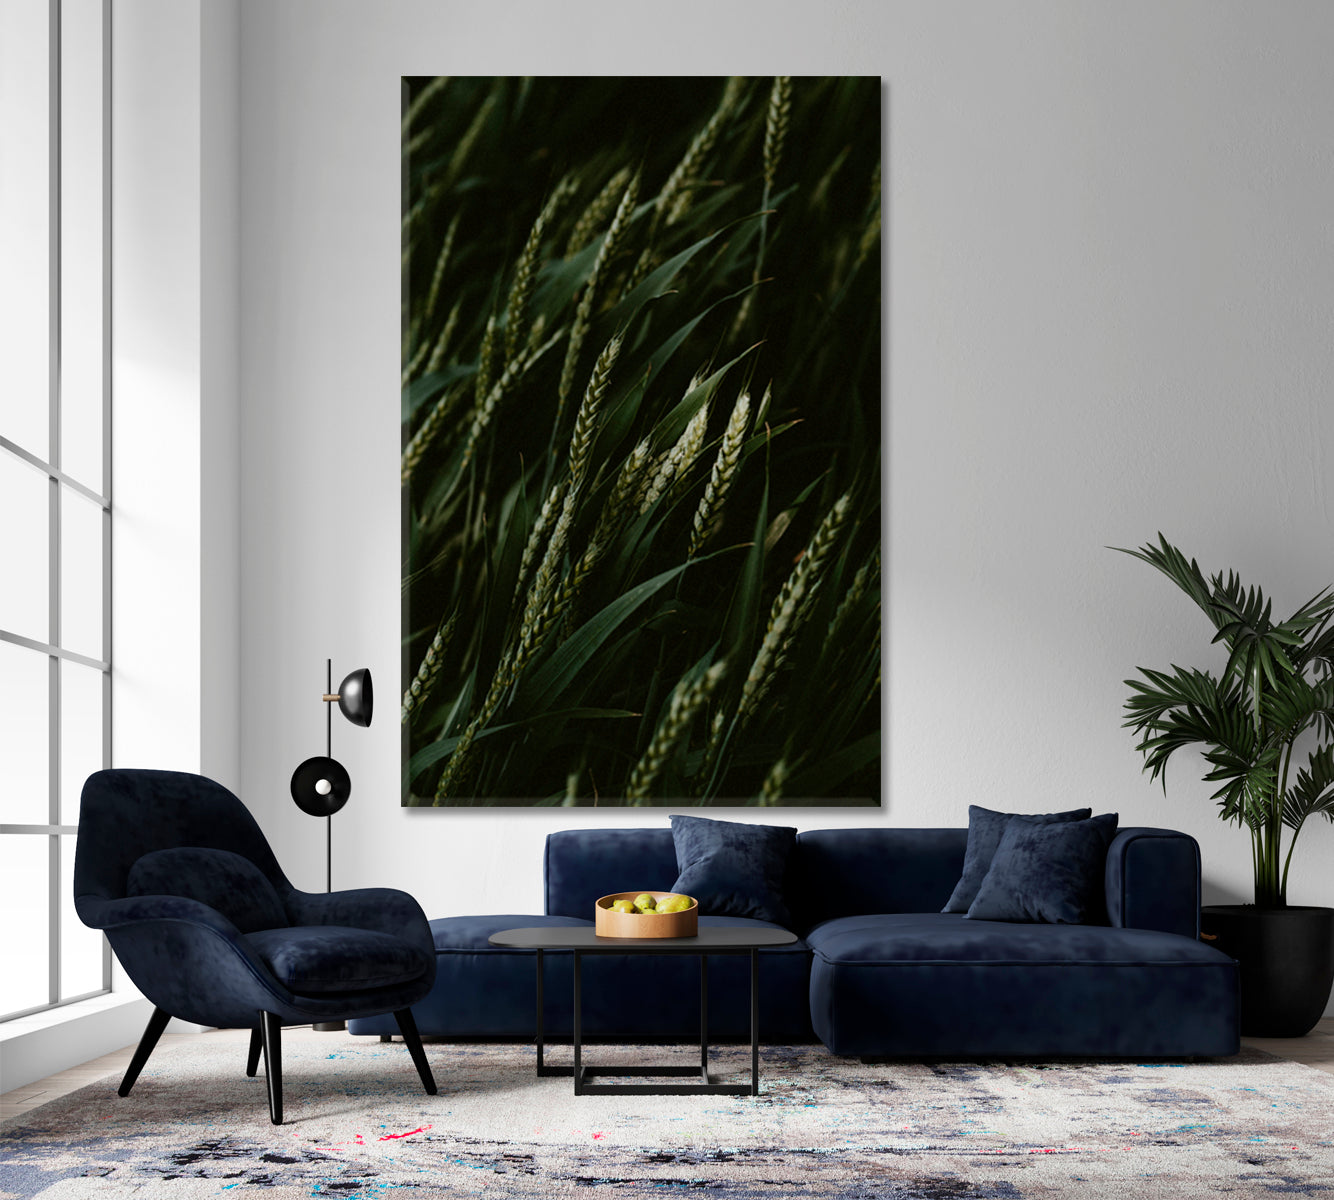 GREEN HOME The Beauty of Green Wheat Sticks Natural Plants Canvas Print - Vertical 1 panel Floral & Botanical Split Art Artesty   